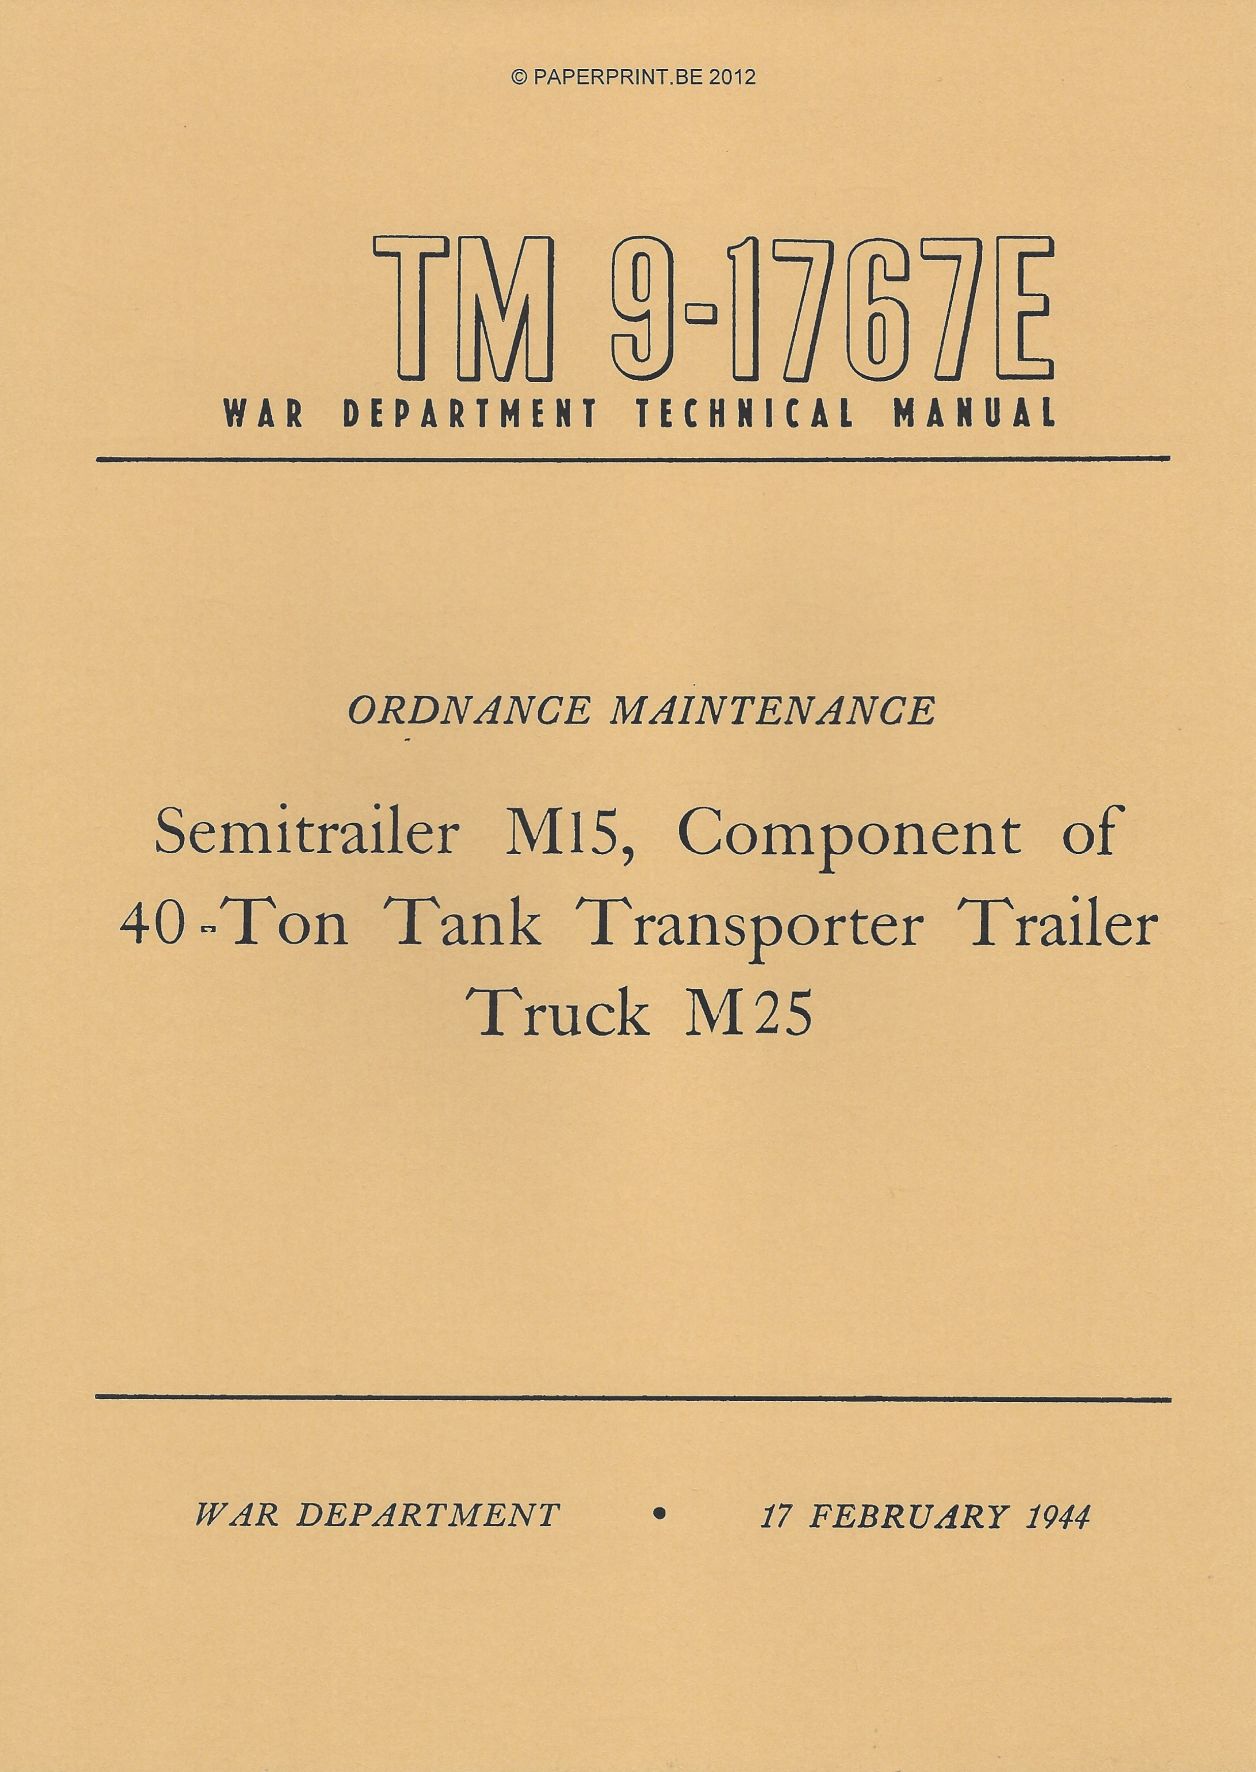 TM 9-1767E US SEMITRAILER M15, COMPONENT OF 40-TON TANK TRANSPORTER TRAILER TRUCK M25